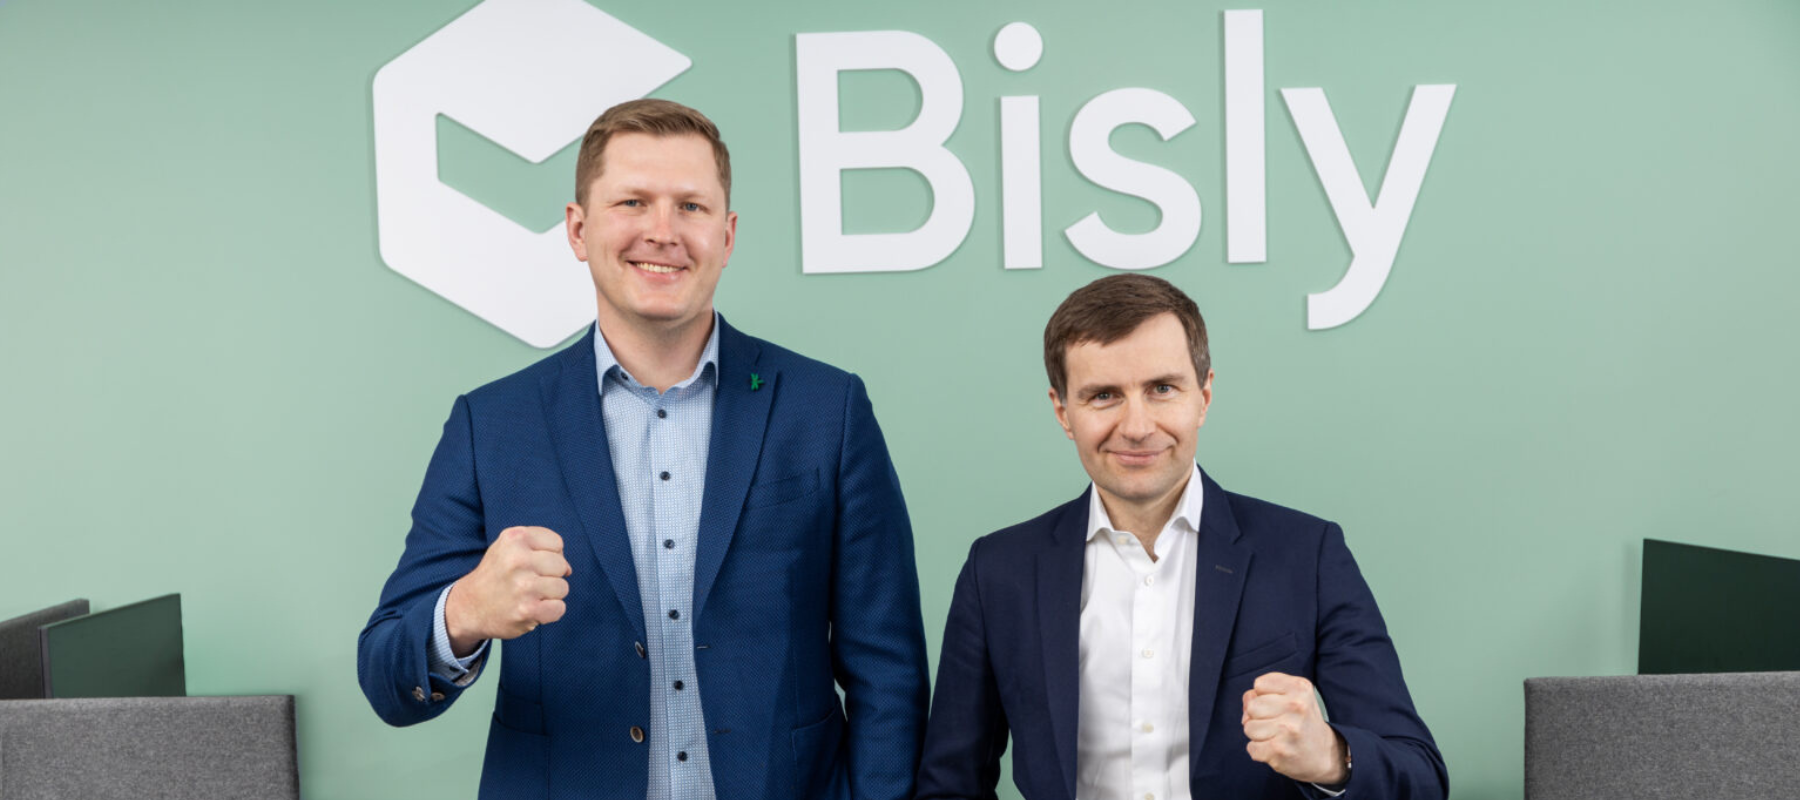 Estonian construction tech startup Bisly raises €6.2m to expand its smart building platform across Europe